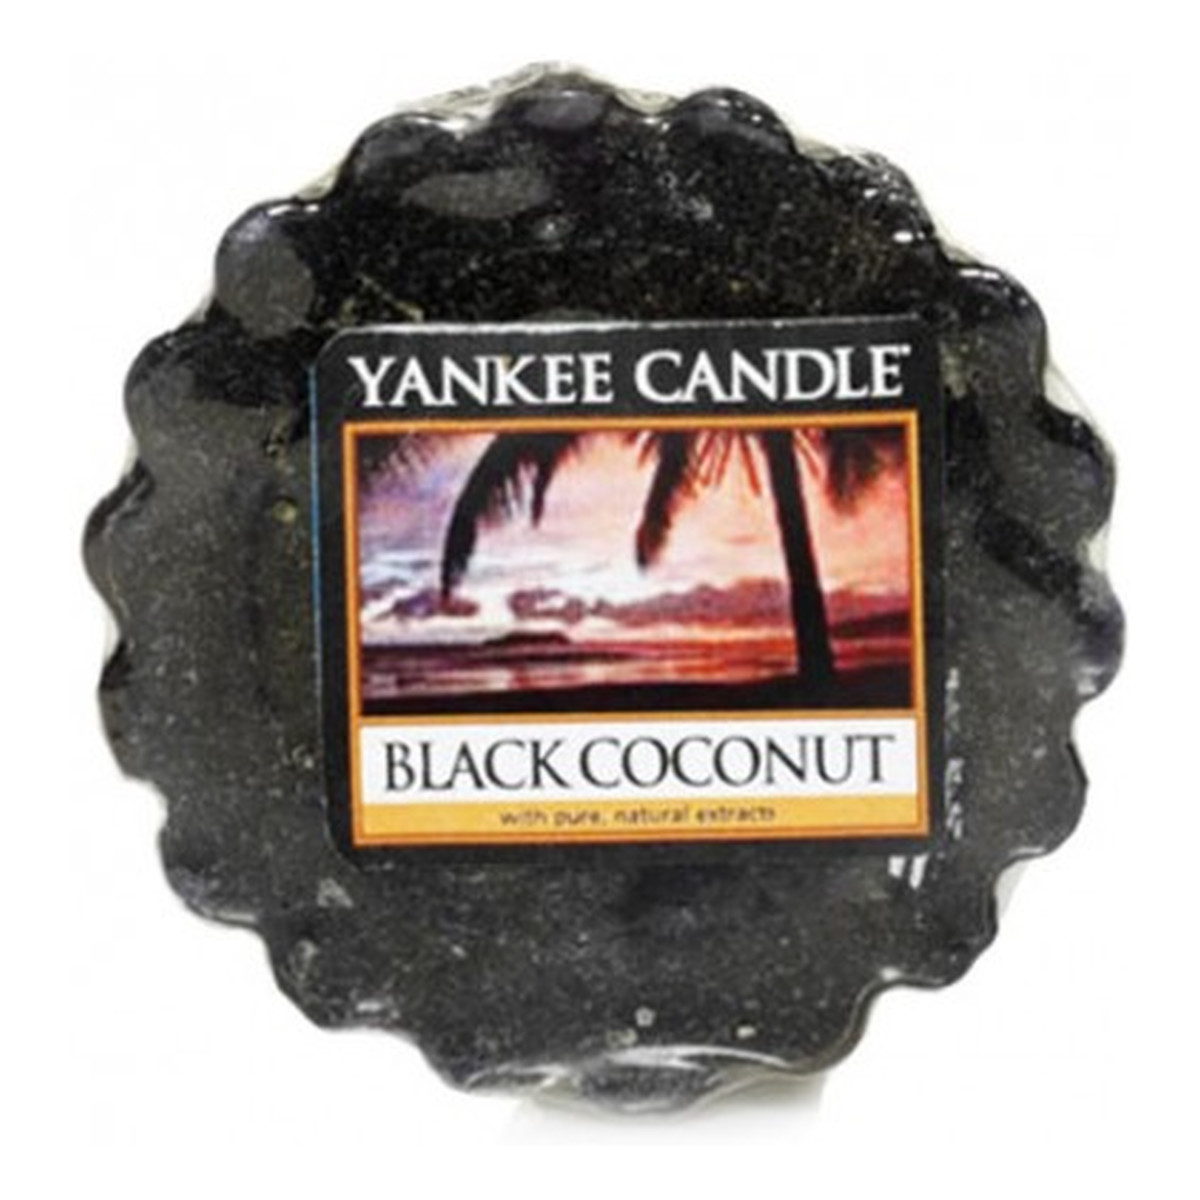 Yankee Candle Wax wosk zapachowy Black Coconut 22g